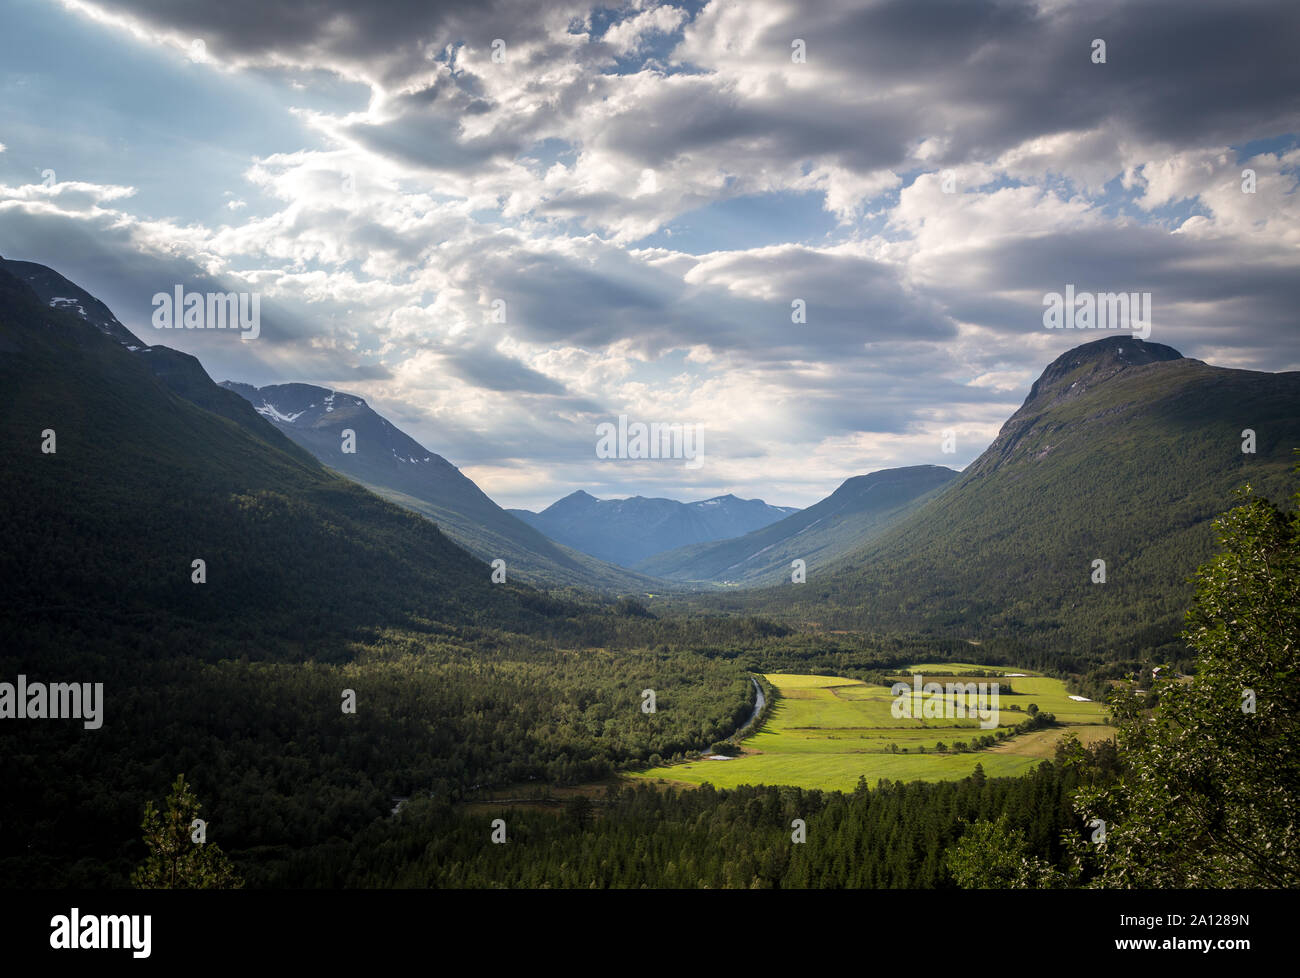 Summer time in rural areas of Viromdalen valley in Trollheimen mountains, norwegian national park. Stock Photo